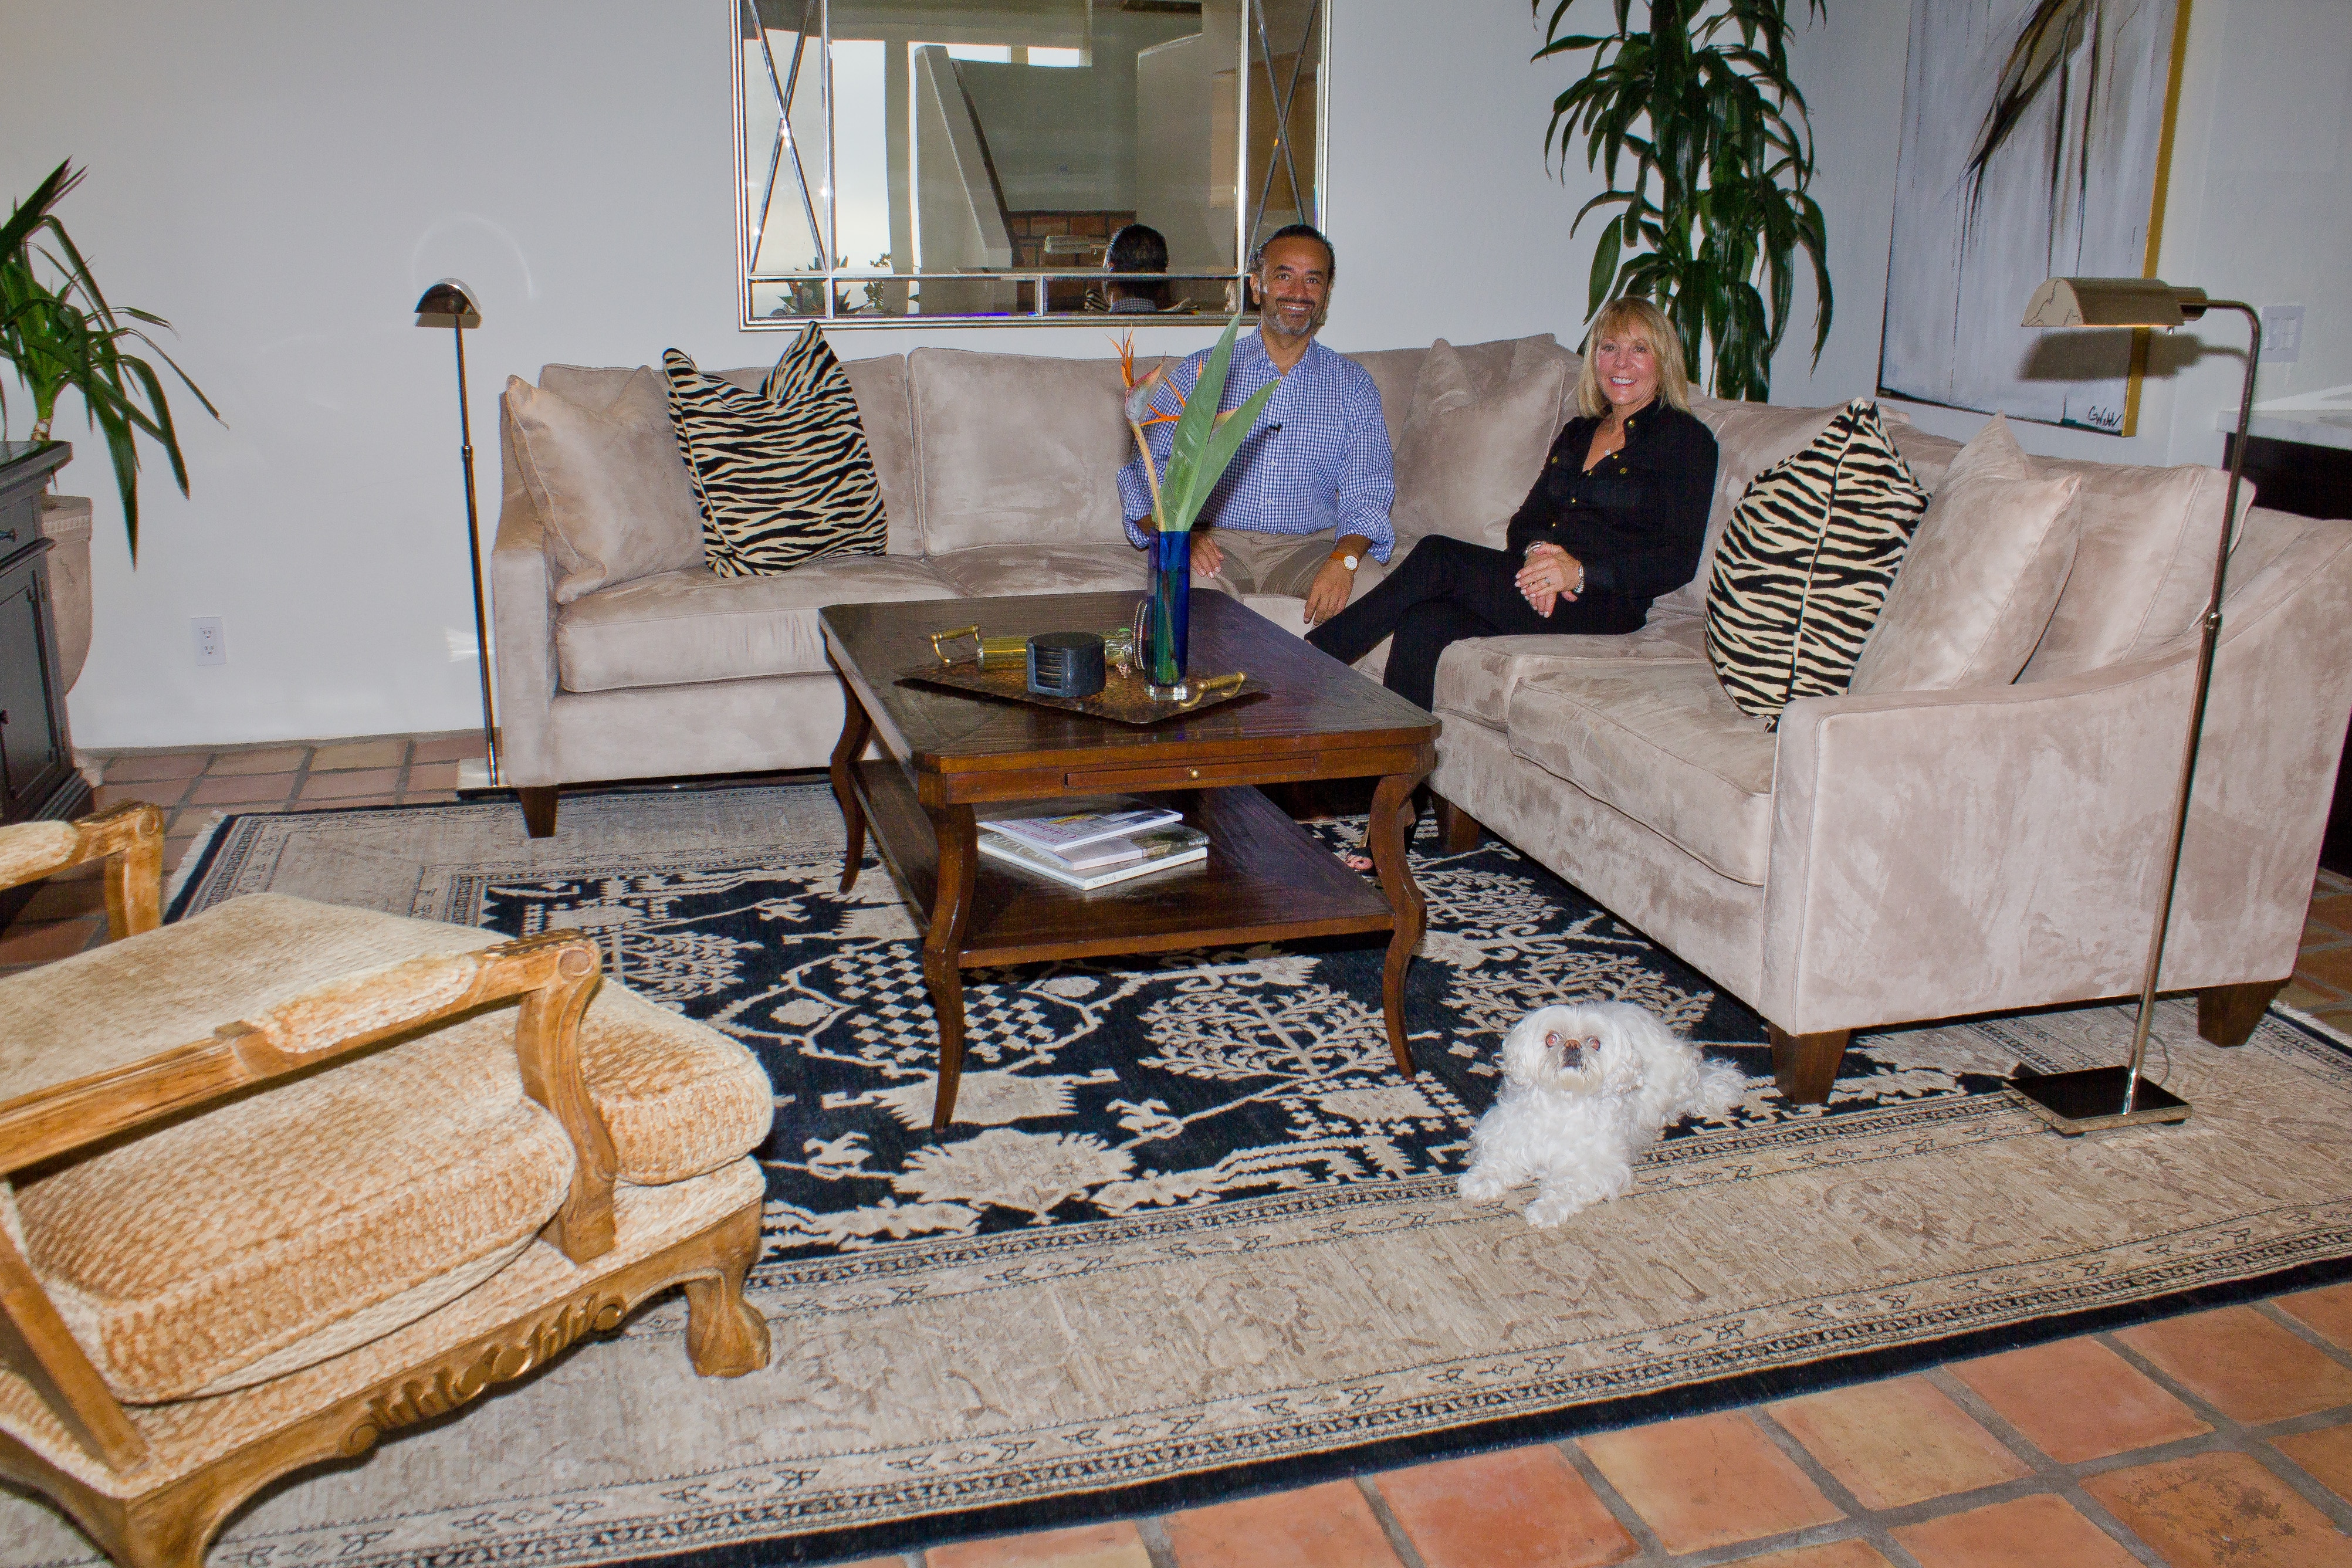 Design-santa-barbara-interior-design-living-room-furniture-sofa-couch-coffee-table-chairs